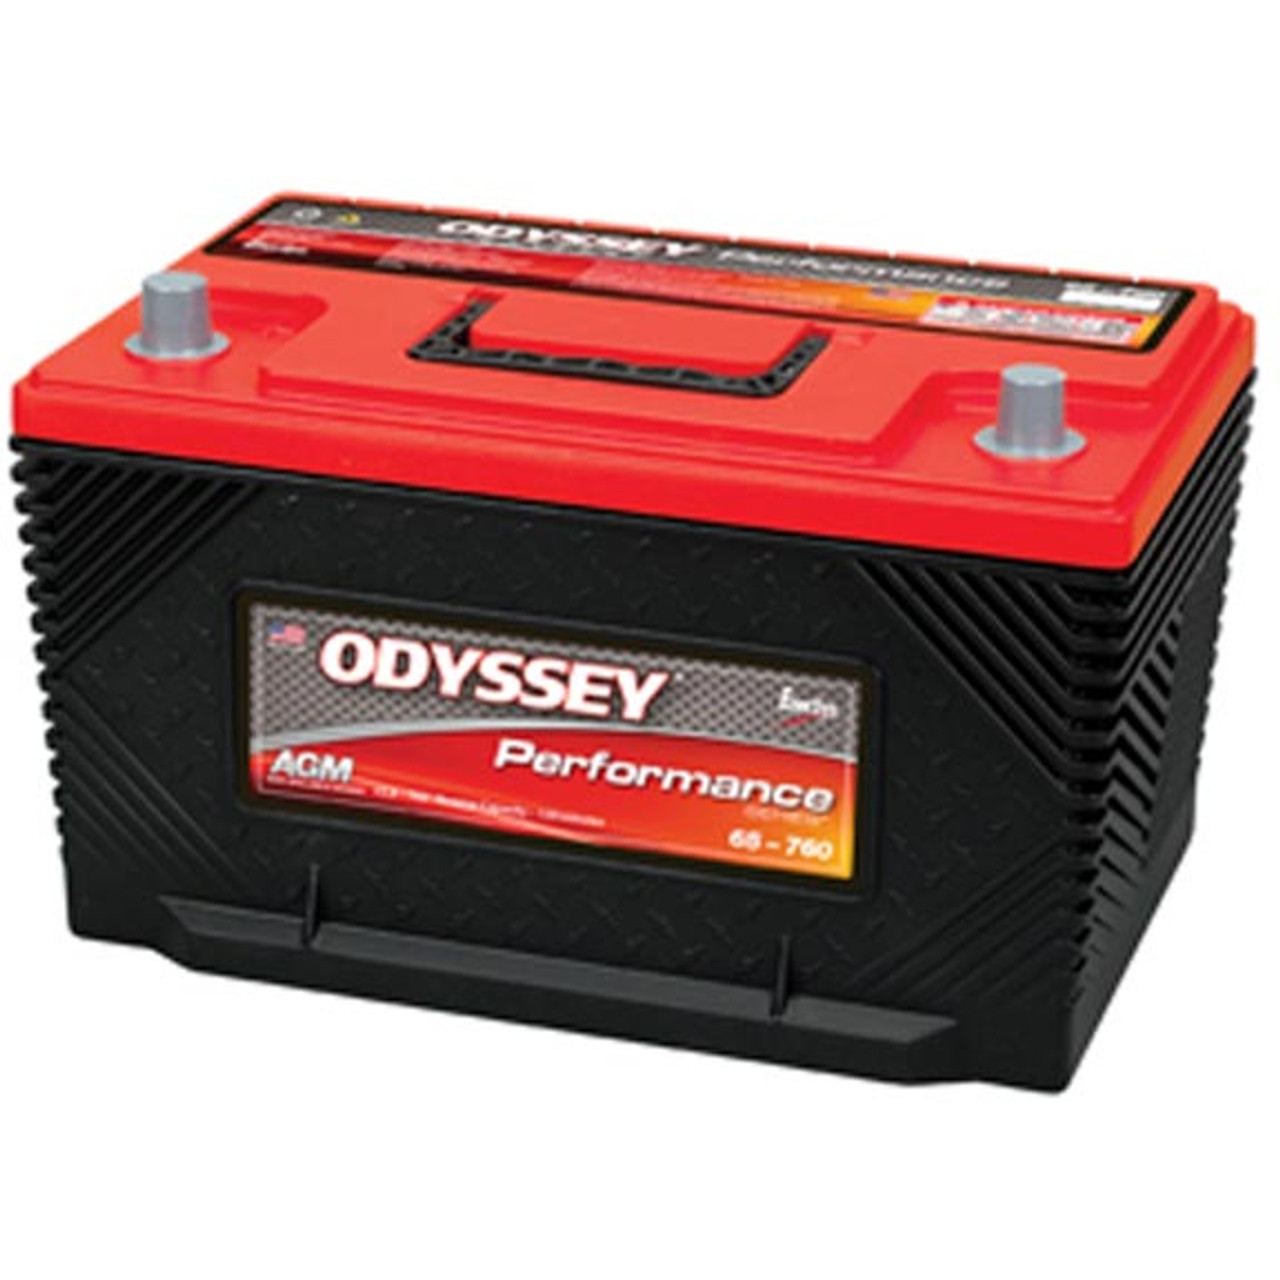 Odyssey Performance AGM Battery 65-760